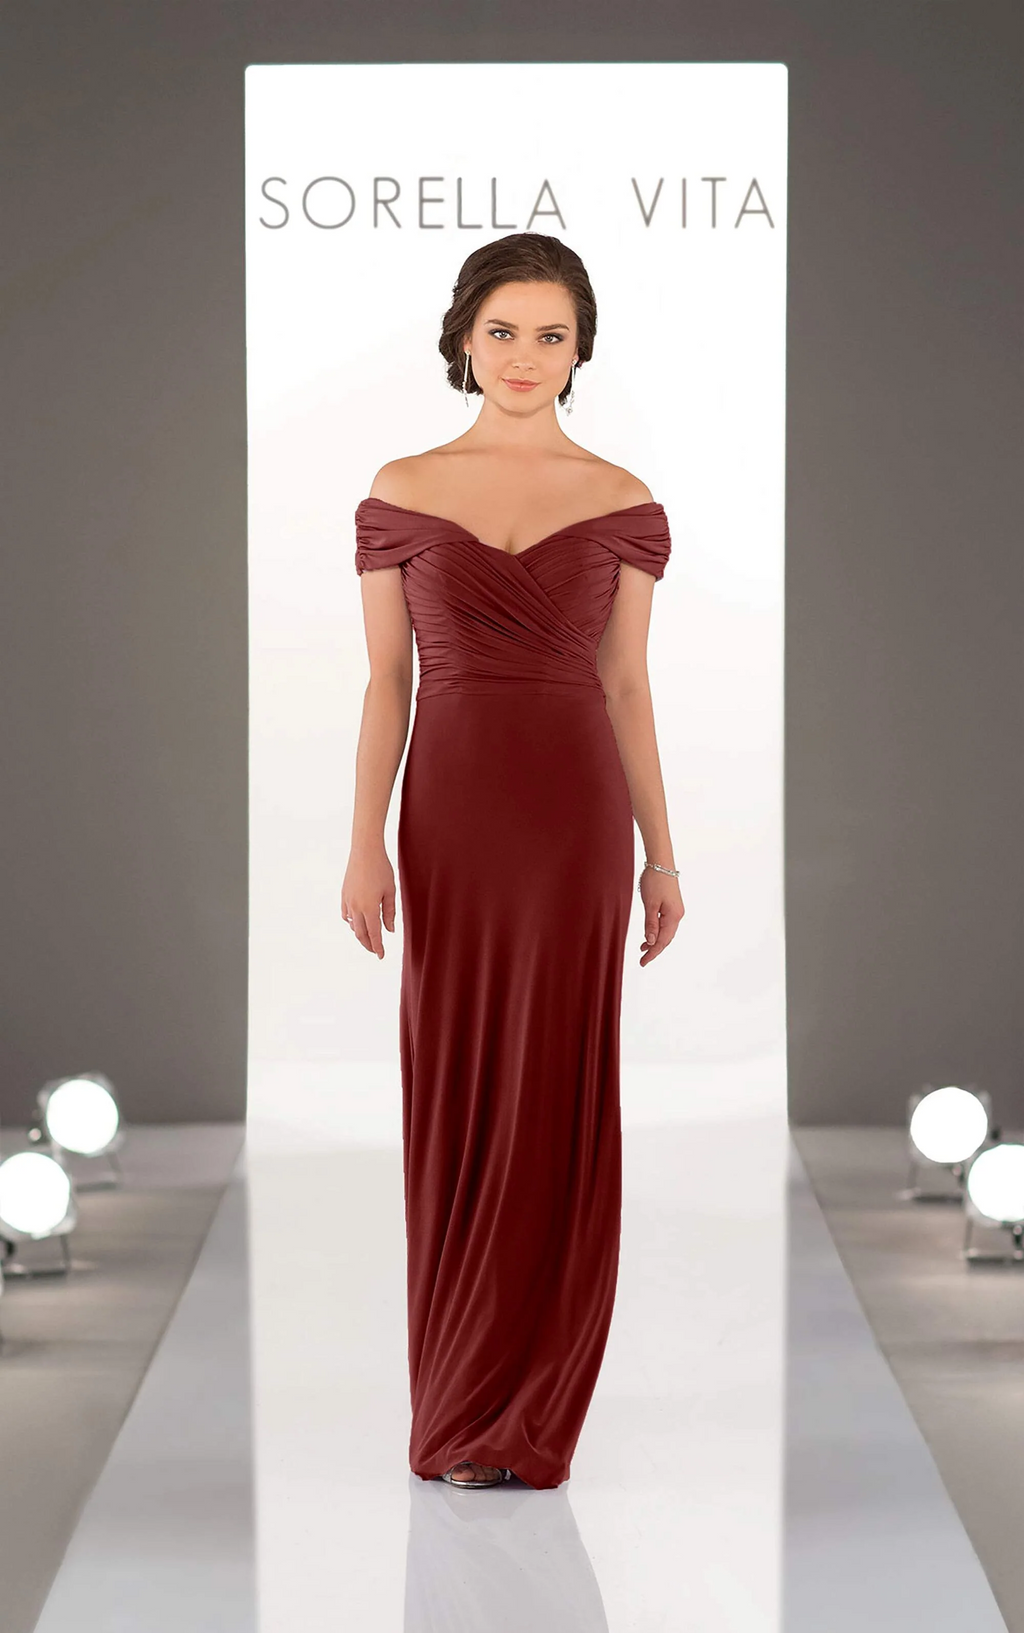 Sorella Vita Dress Style 8996 (Garnet-Size 14) Prom, Ball., Black-tie, Bridesmaid, Pageant